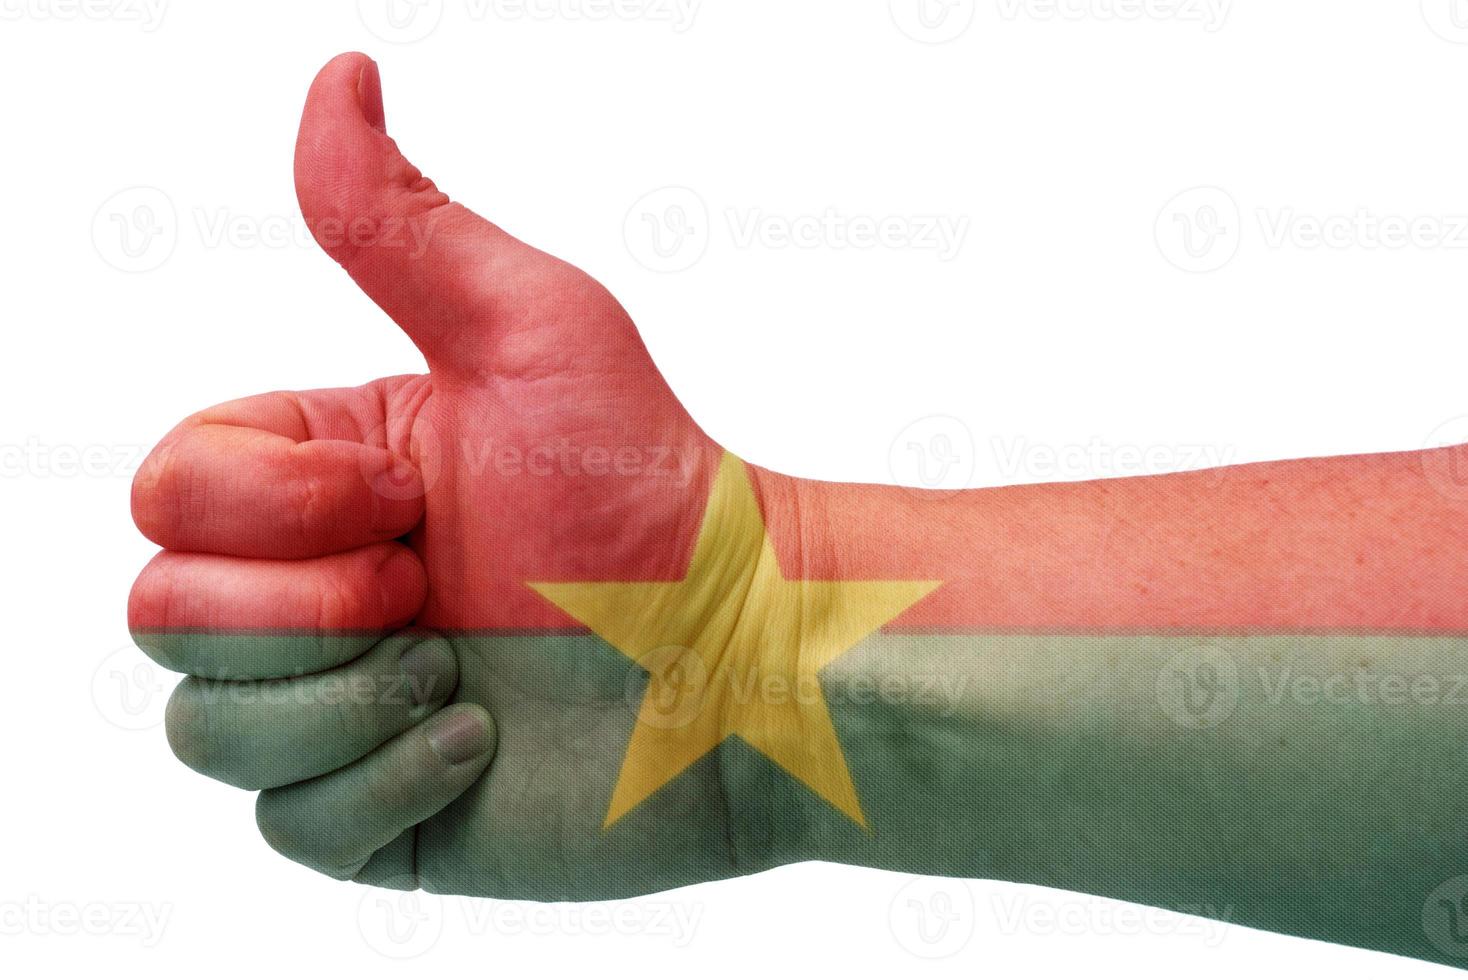 le concept de burkina faso-main lève le pouce avec le drapeau du burkina faso. photo